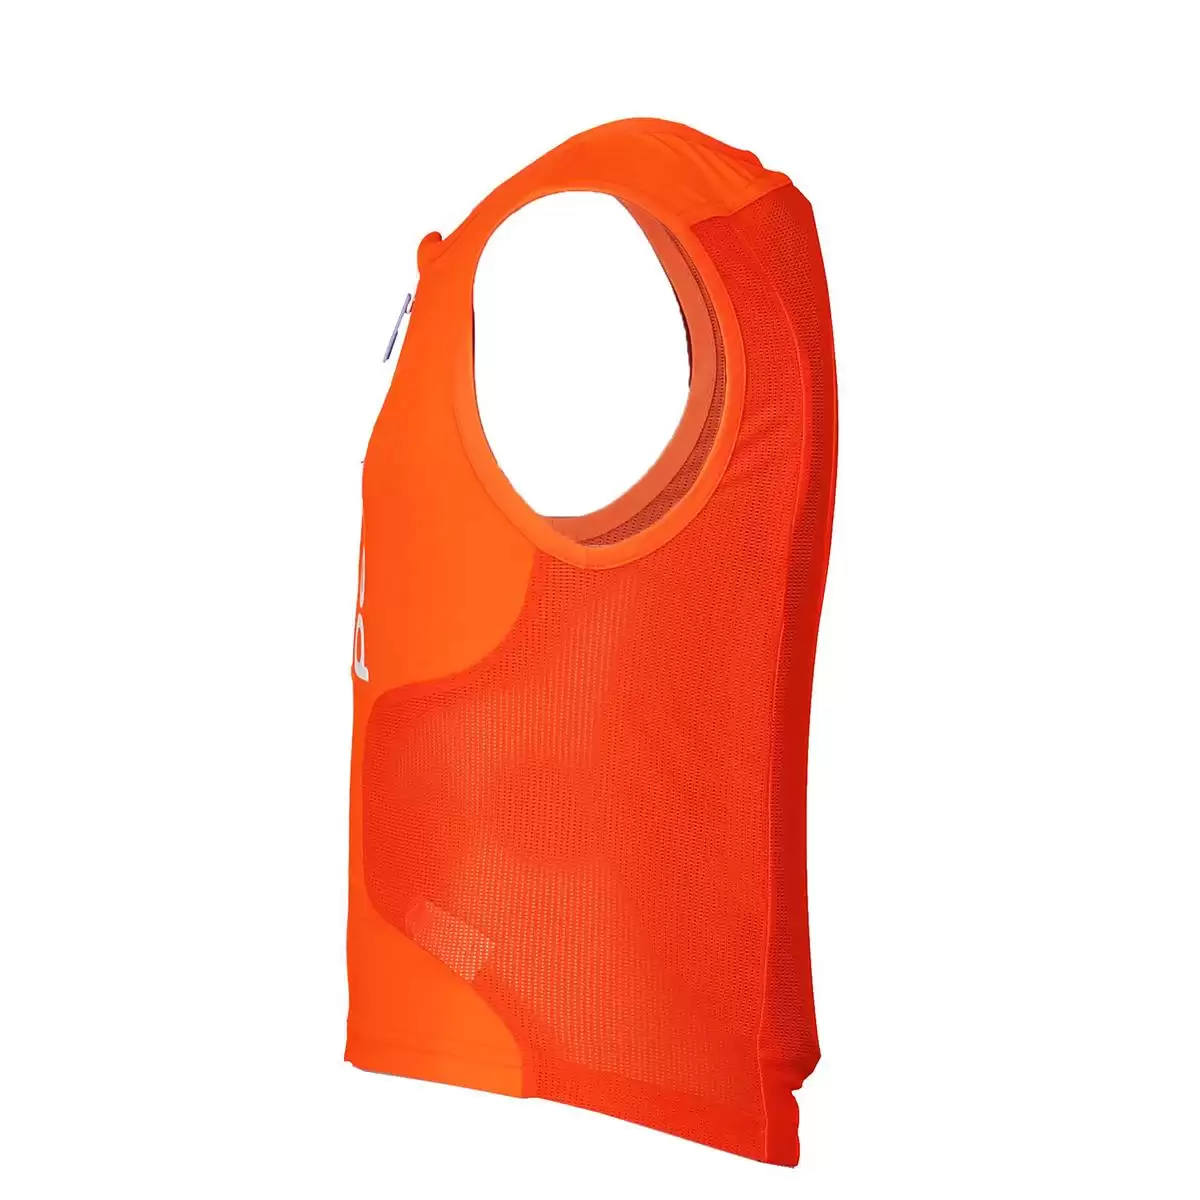 Kid POCito VPD Air Vest protective gilet Orange Size M #1